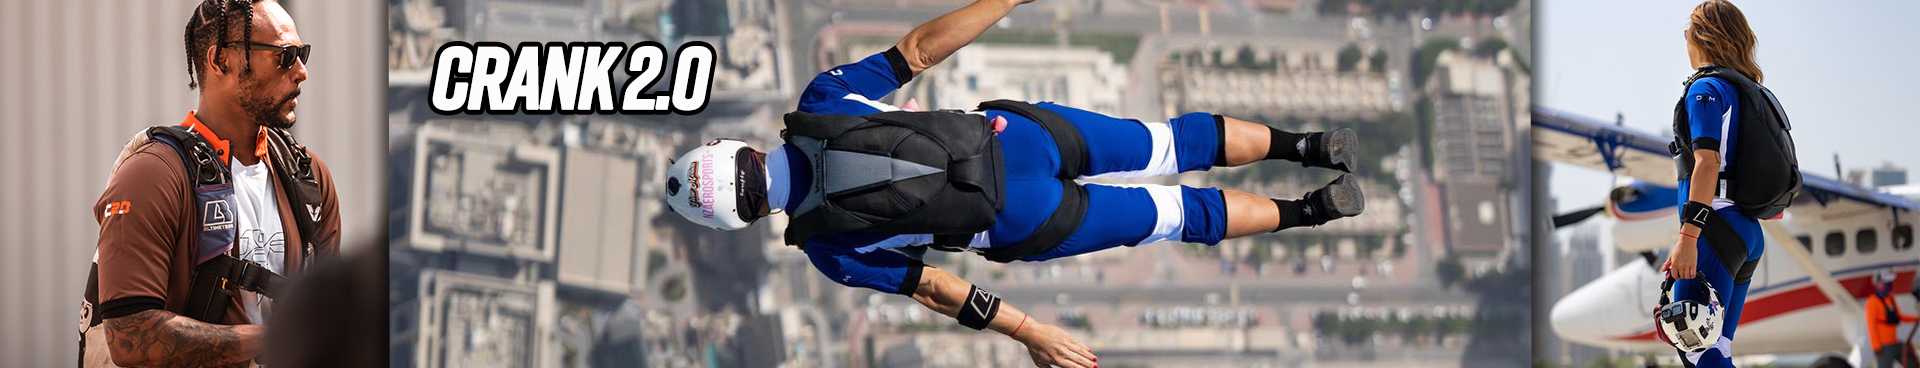 CRANK 2.0 Shorty, Short Skydiving Suit, Summer Skydiving Gear, Aerodynamic Skydiving Suit, Flexible Flying Apparel